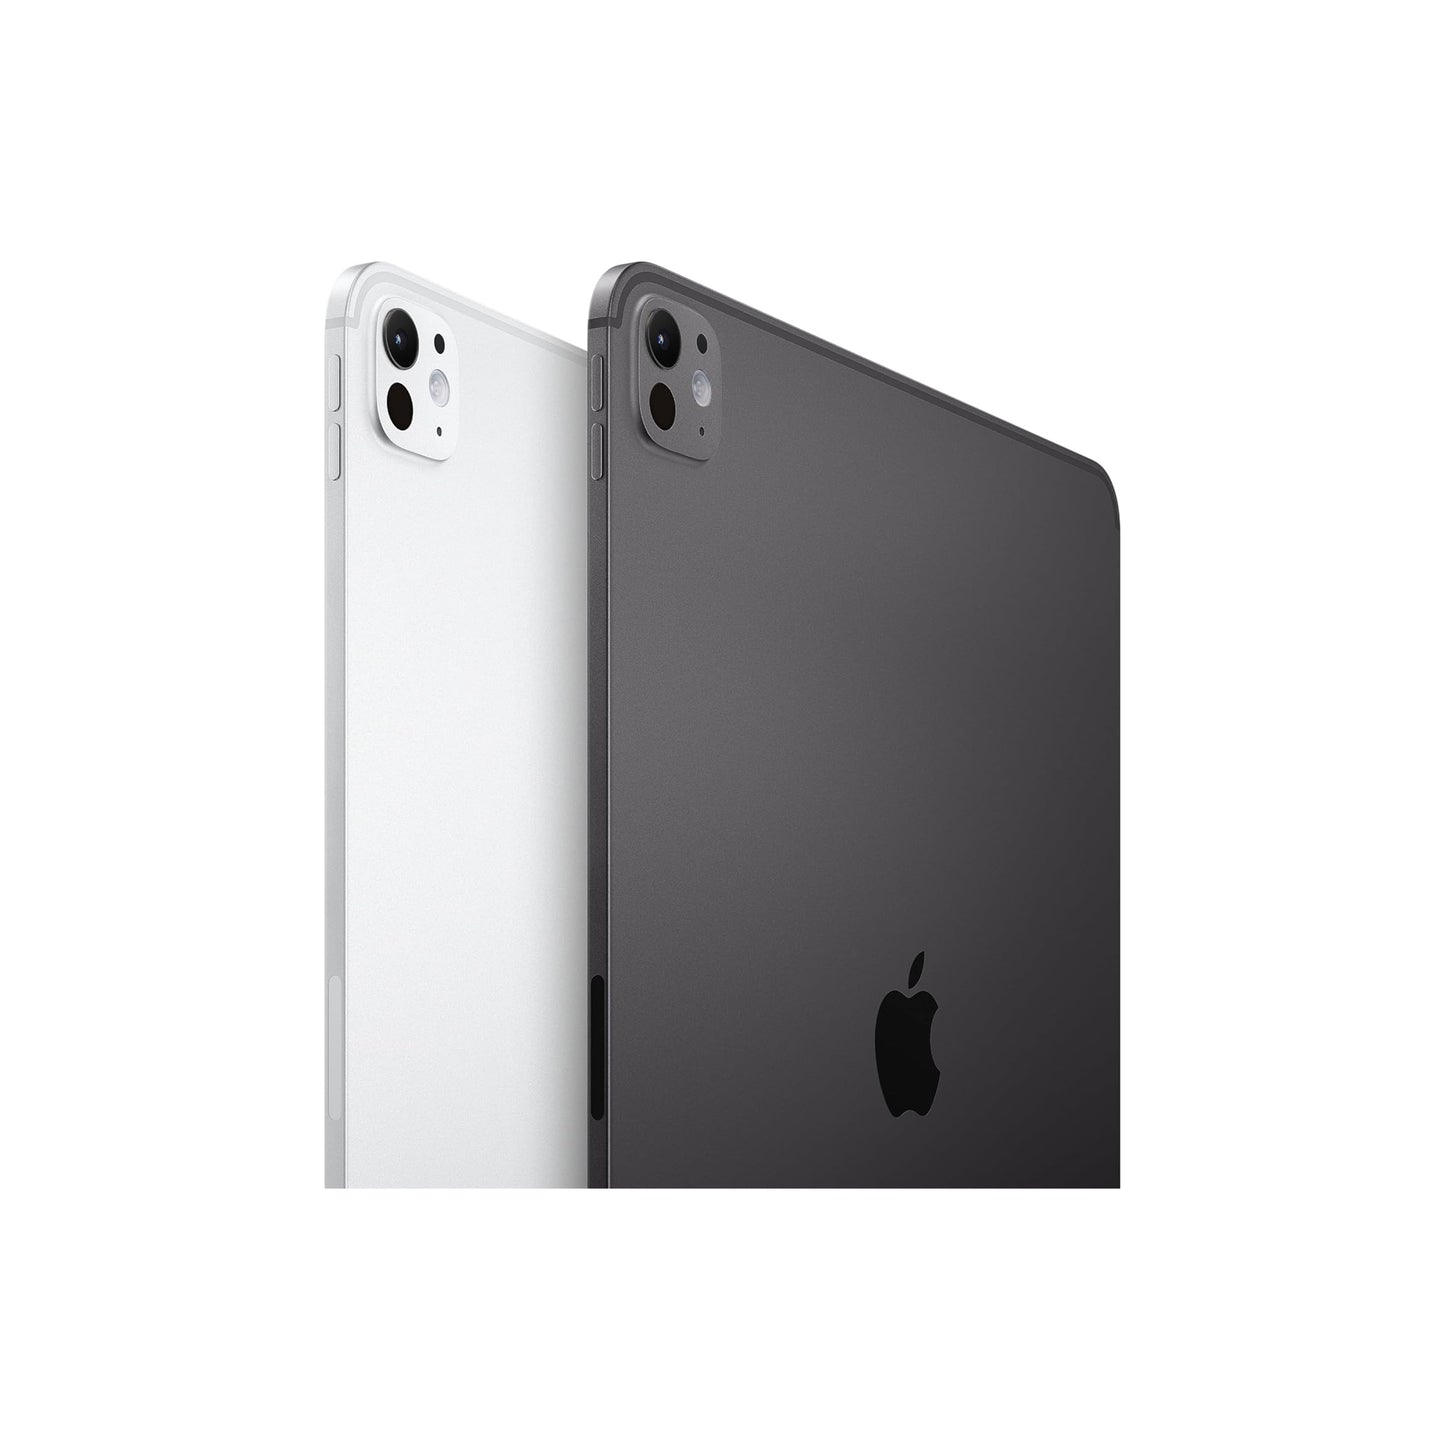 Apple iPad Pro 11 بوصة (M4): شاشة Ultra Retina XDR - زجاج نانو، 1 تيرابايت، كاميرا أمامية 12 ميجابكسل / كاميرا خلفية 12 ميجابكسل، ماسح ضوئي LiDAR، Wi-Fi 6E + 5G خلوي مع eSIM، معرف الوجه - فضي